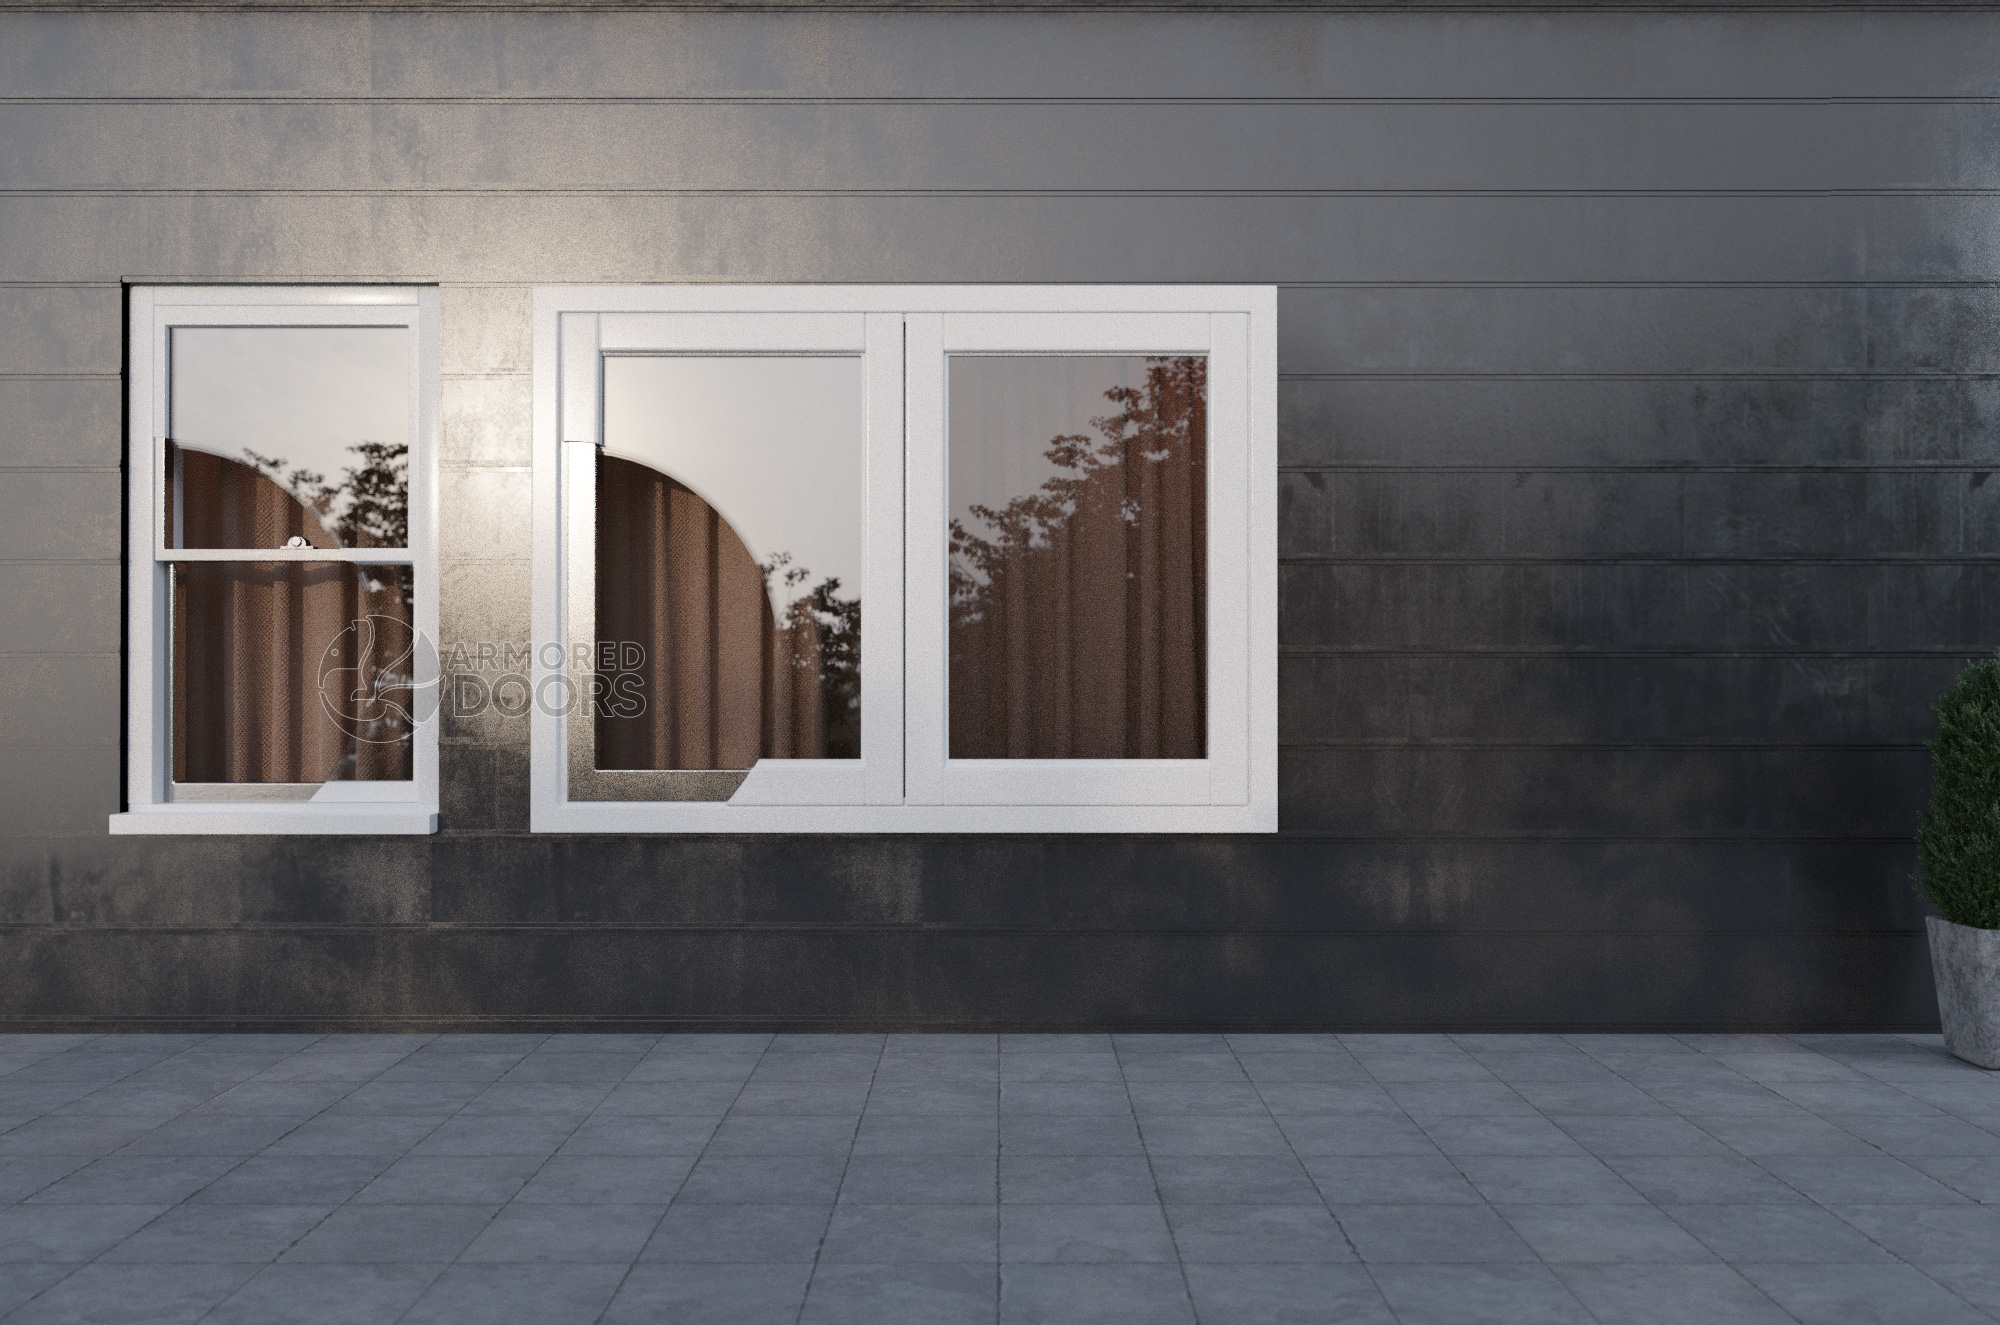 bullet and burglar resistant doors and windows